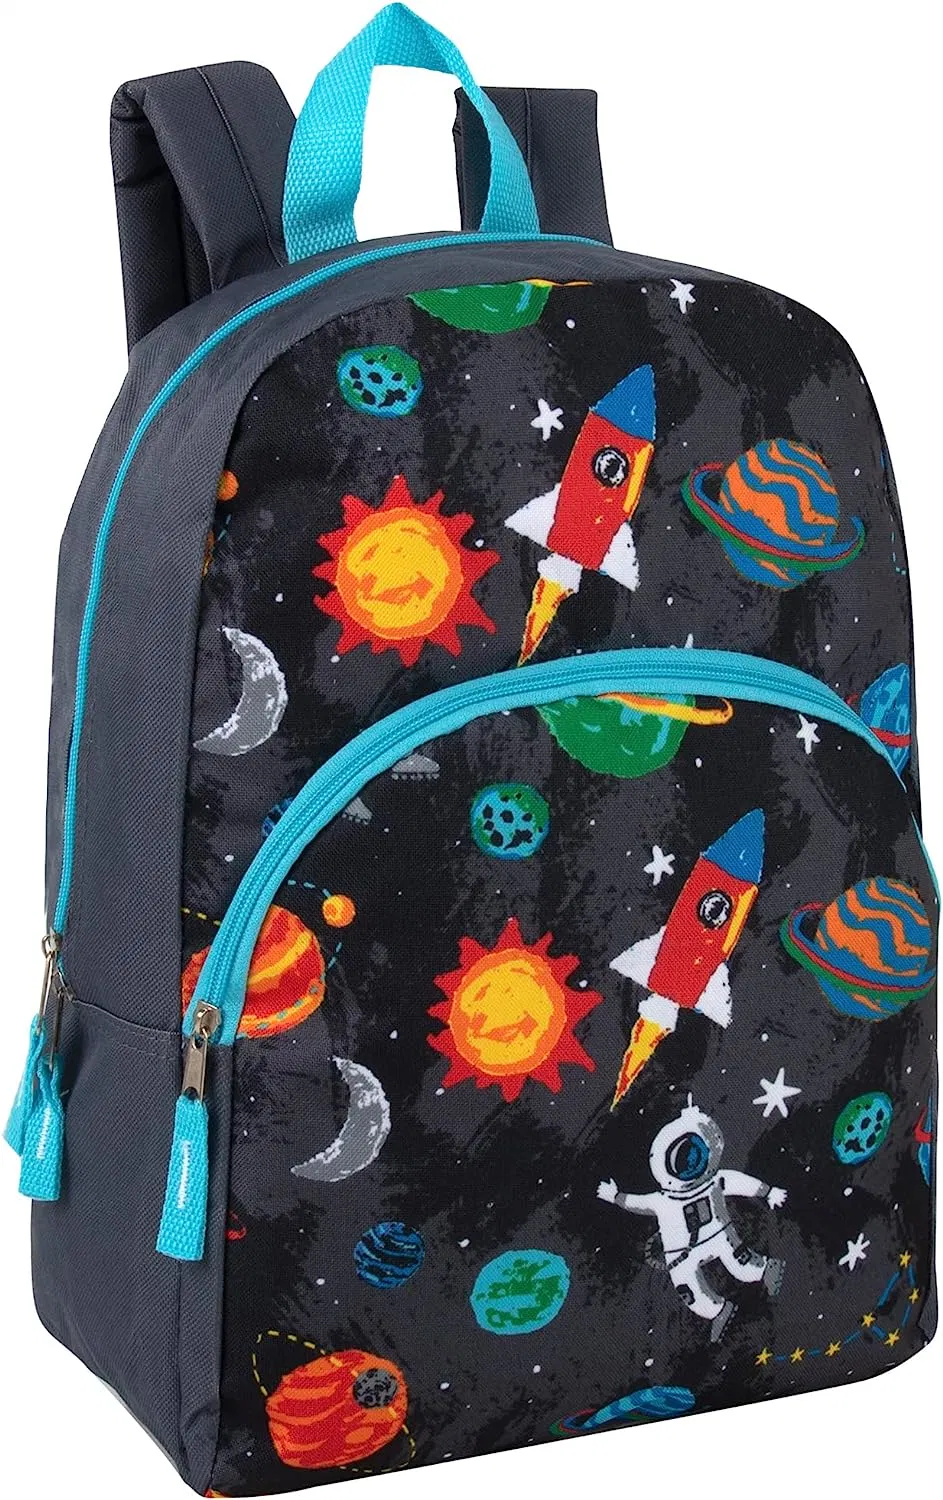 Unisex Kids' Character Backpacks with Adjustable, Padded Shoulder Straps (15")